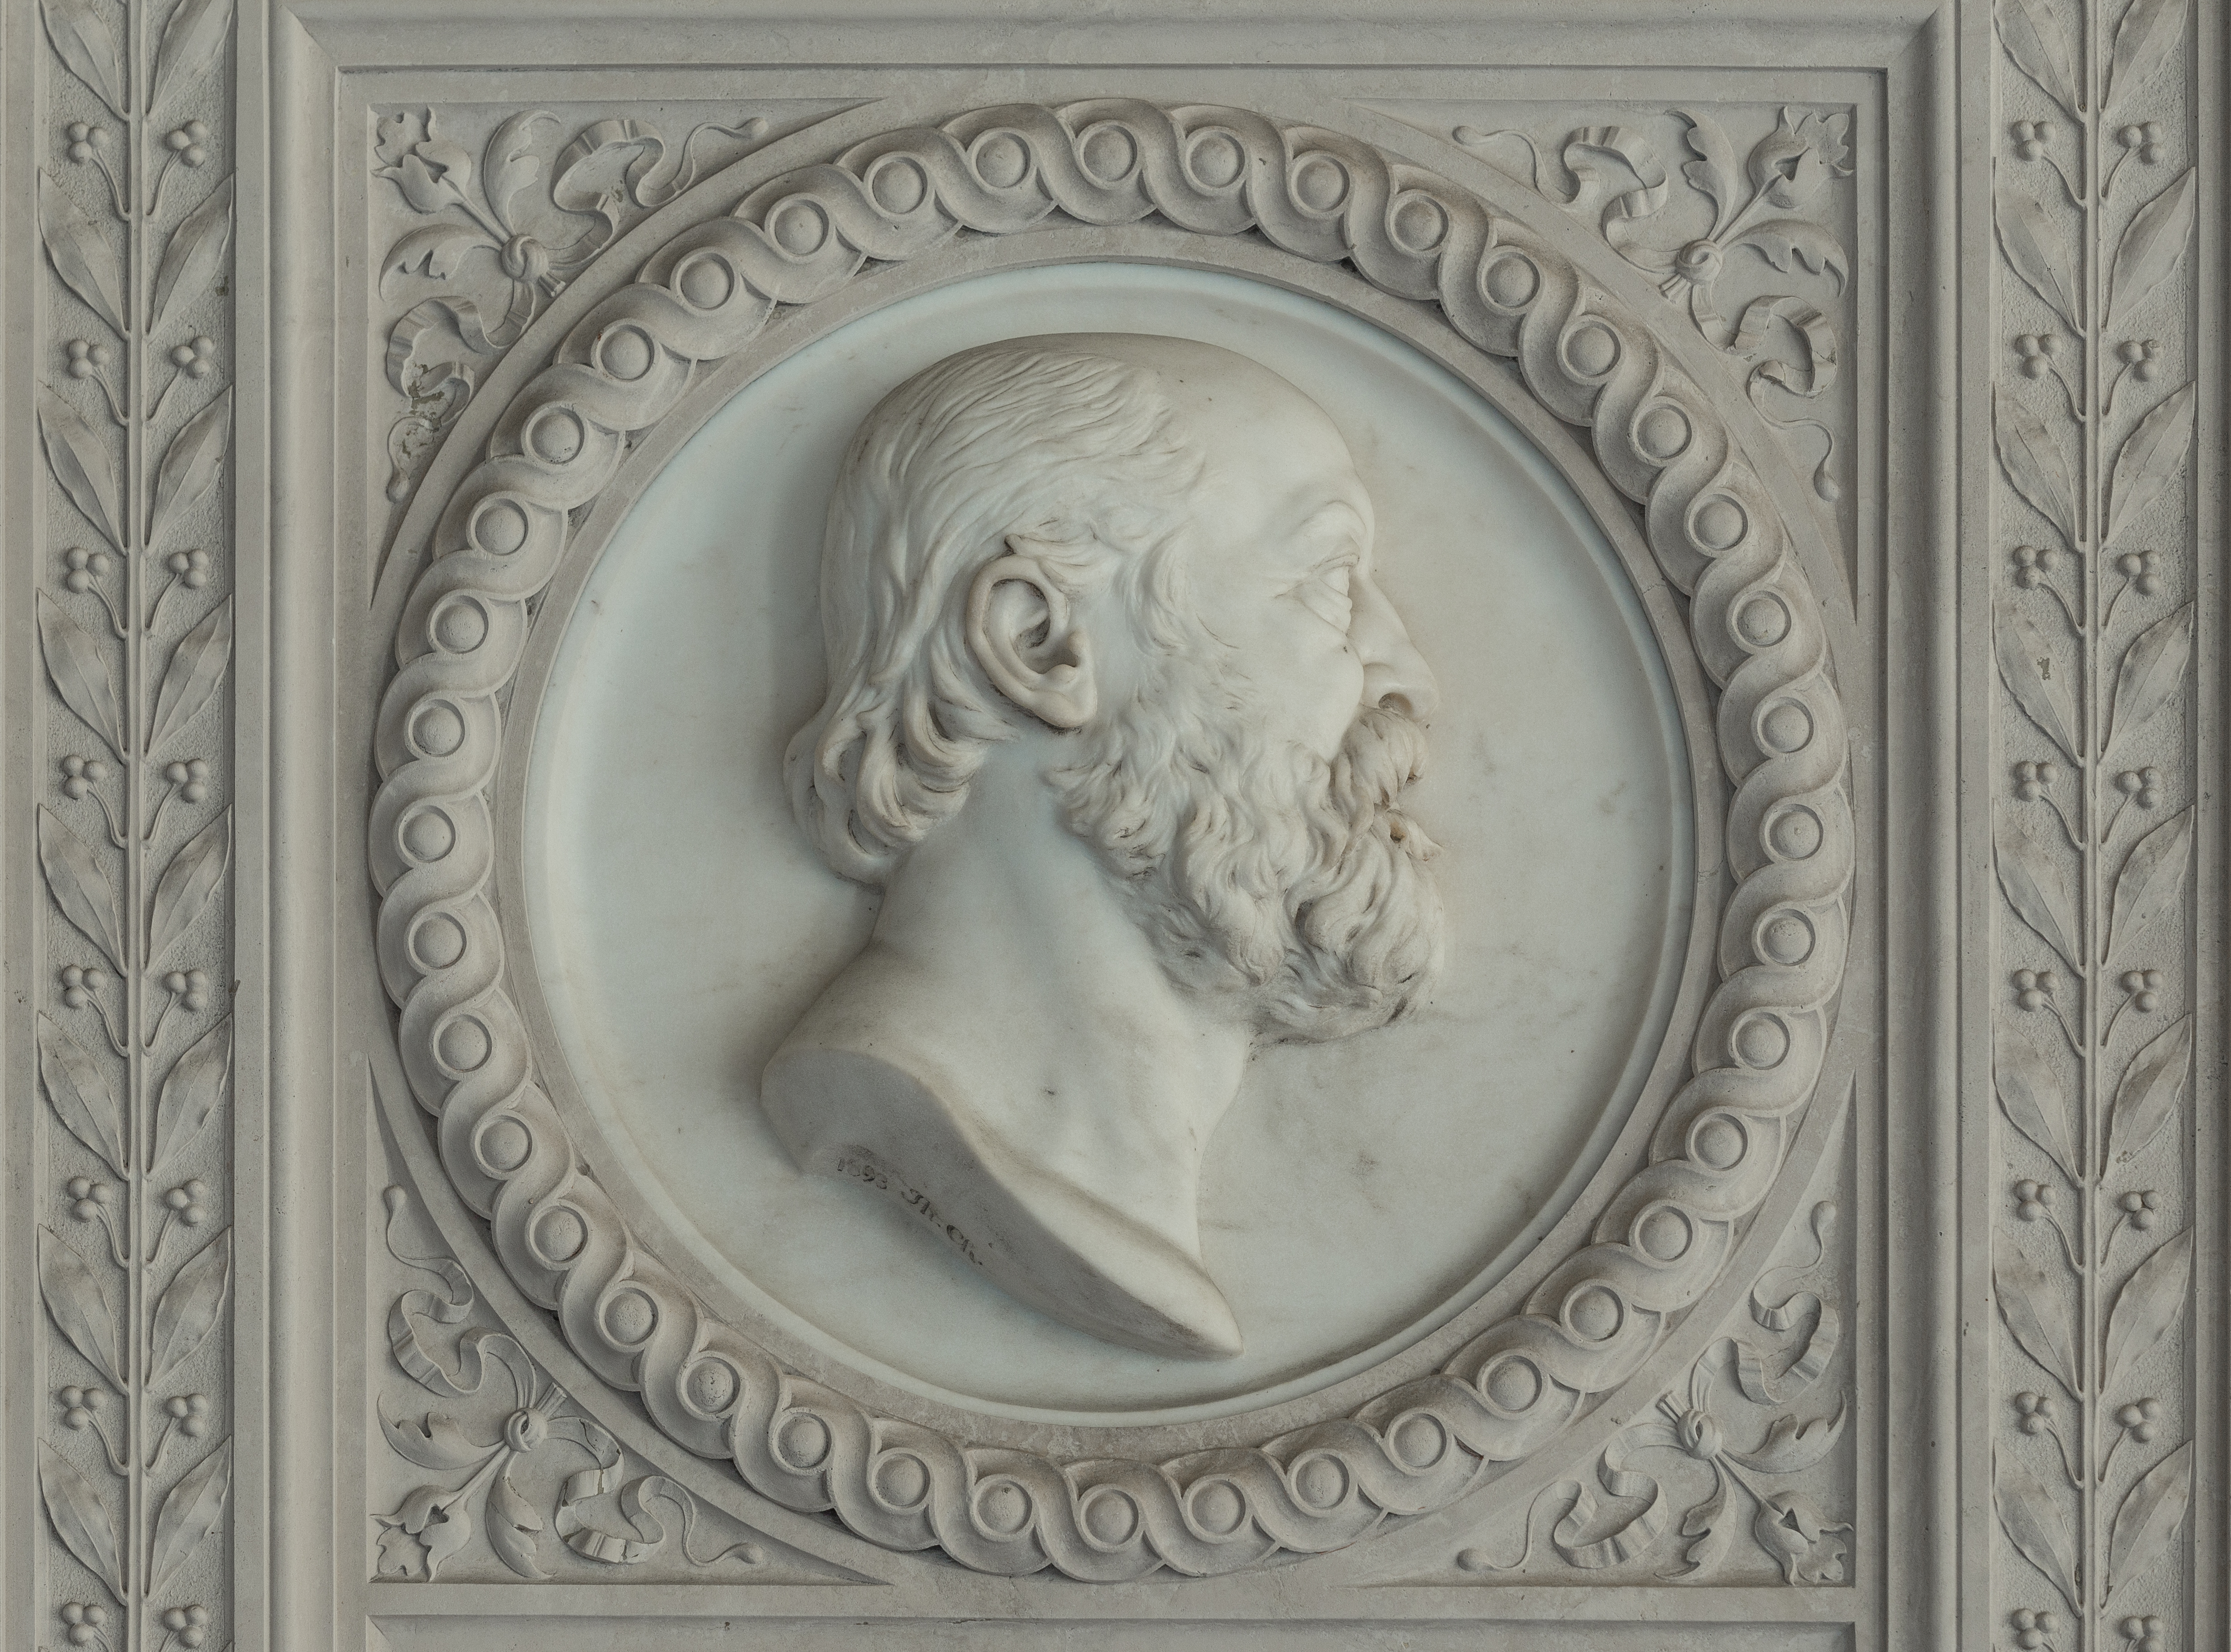 Carl Braun von Fernwald (1823-1891), Nr. 114, plaque and basrelief (marble) in the Arkadenhof of the University of Vienna-2983